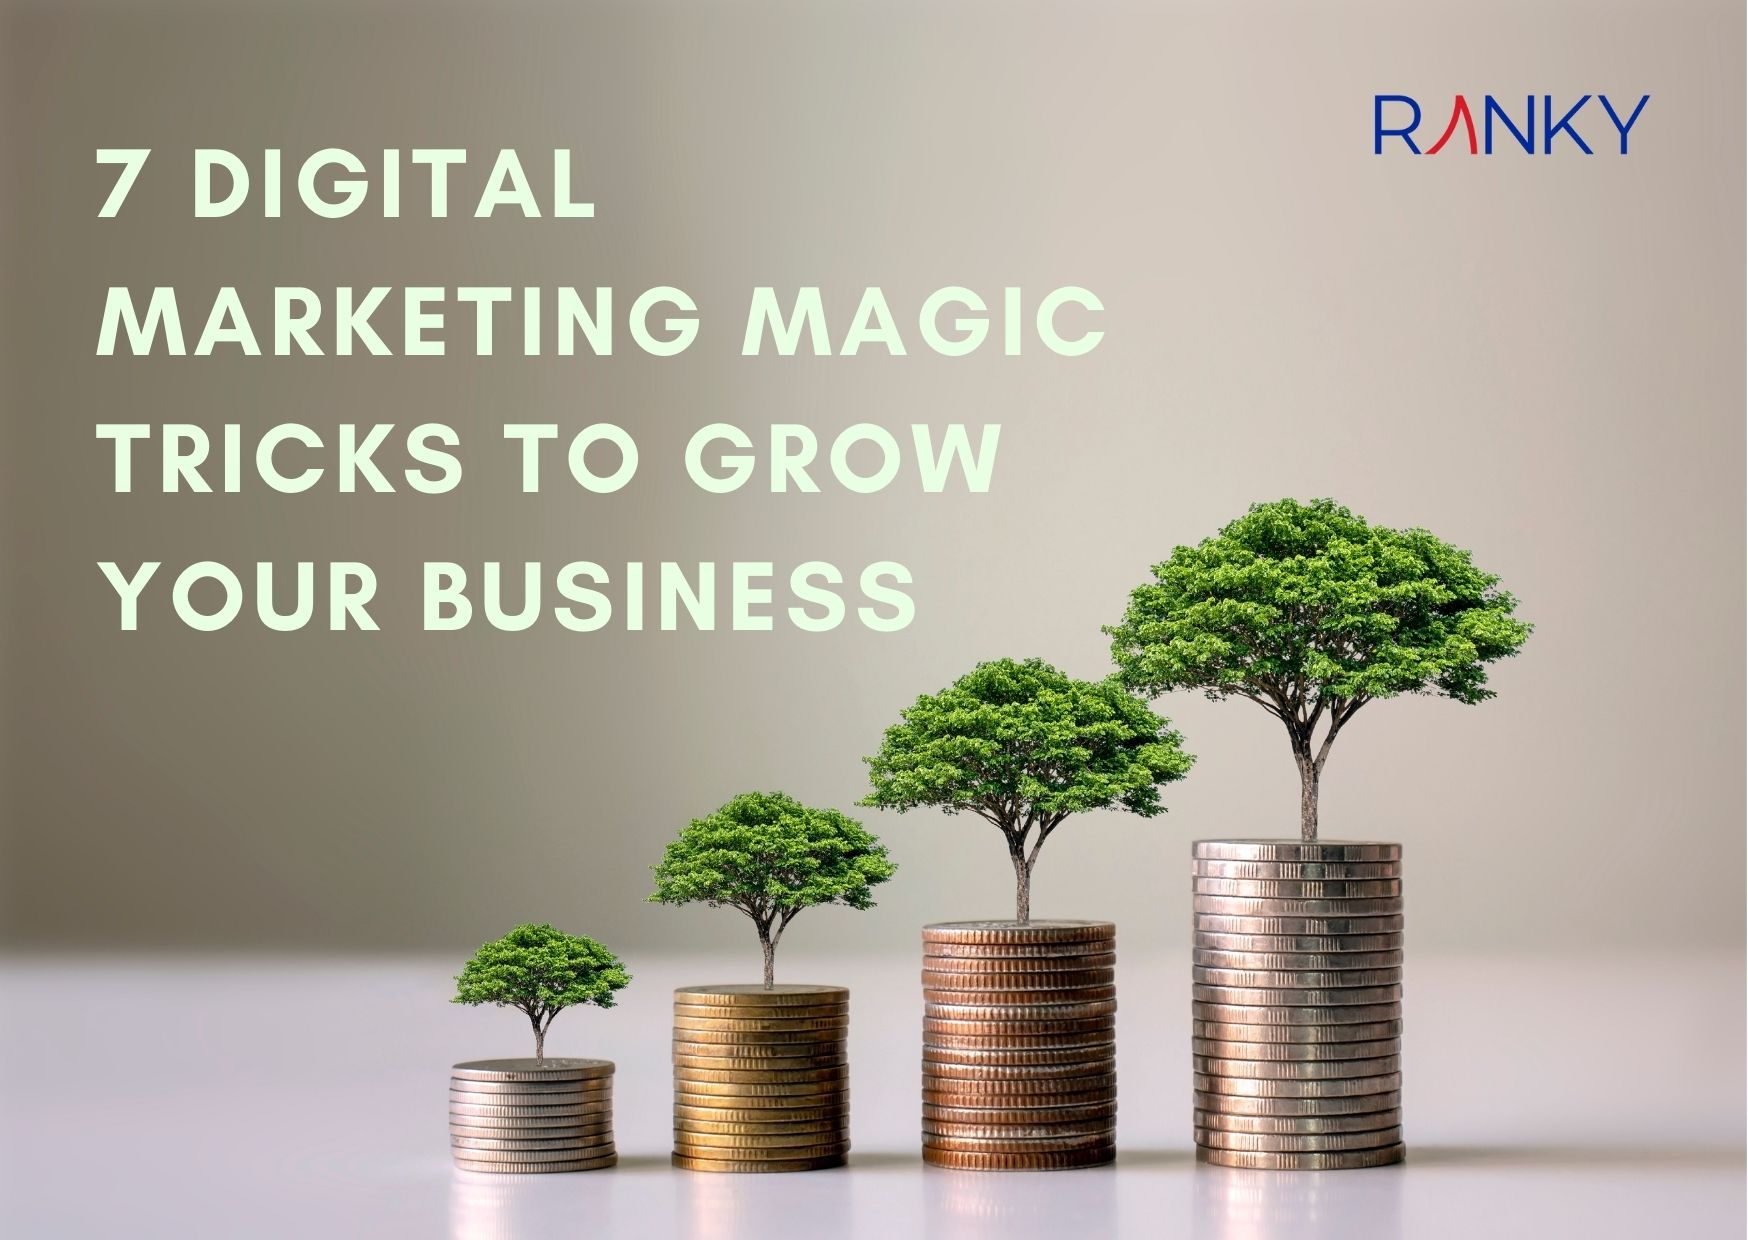 7 Digital Marketing Magic Tricks to Grow Your Business